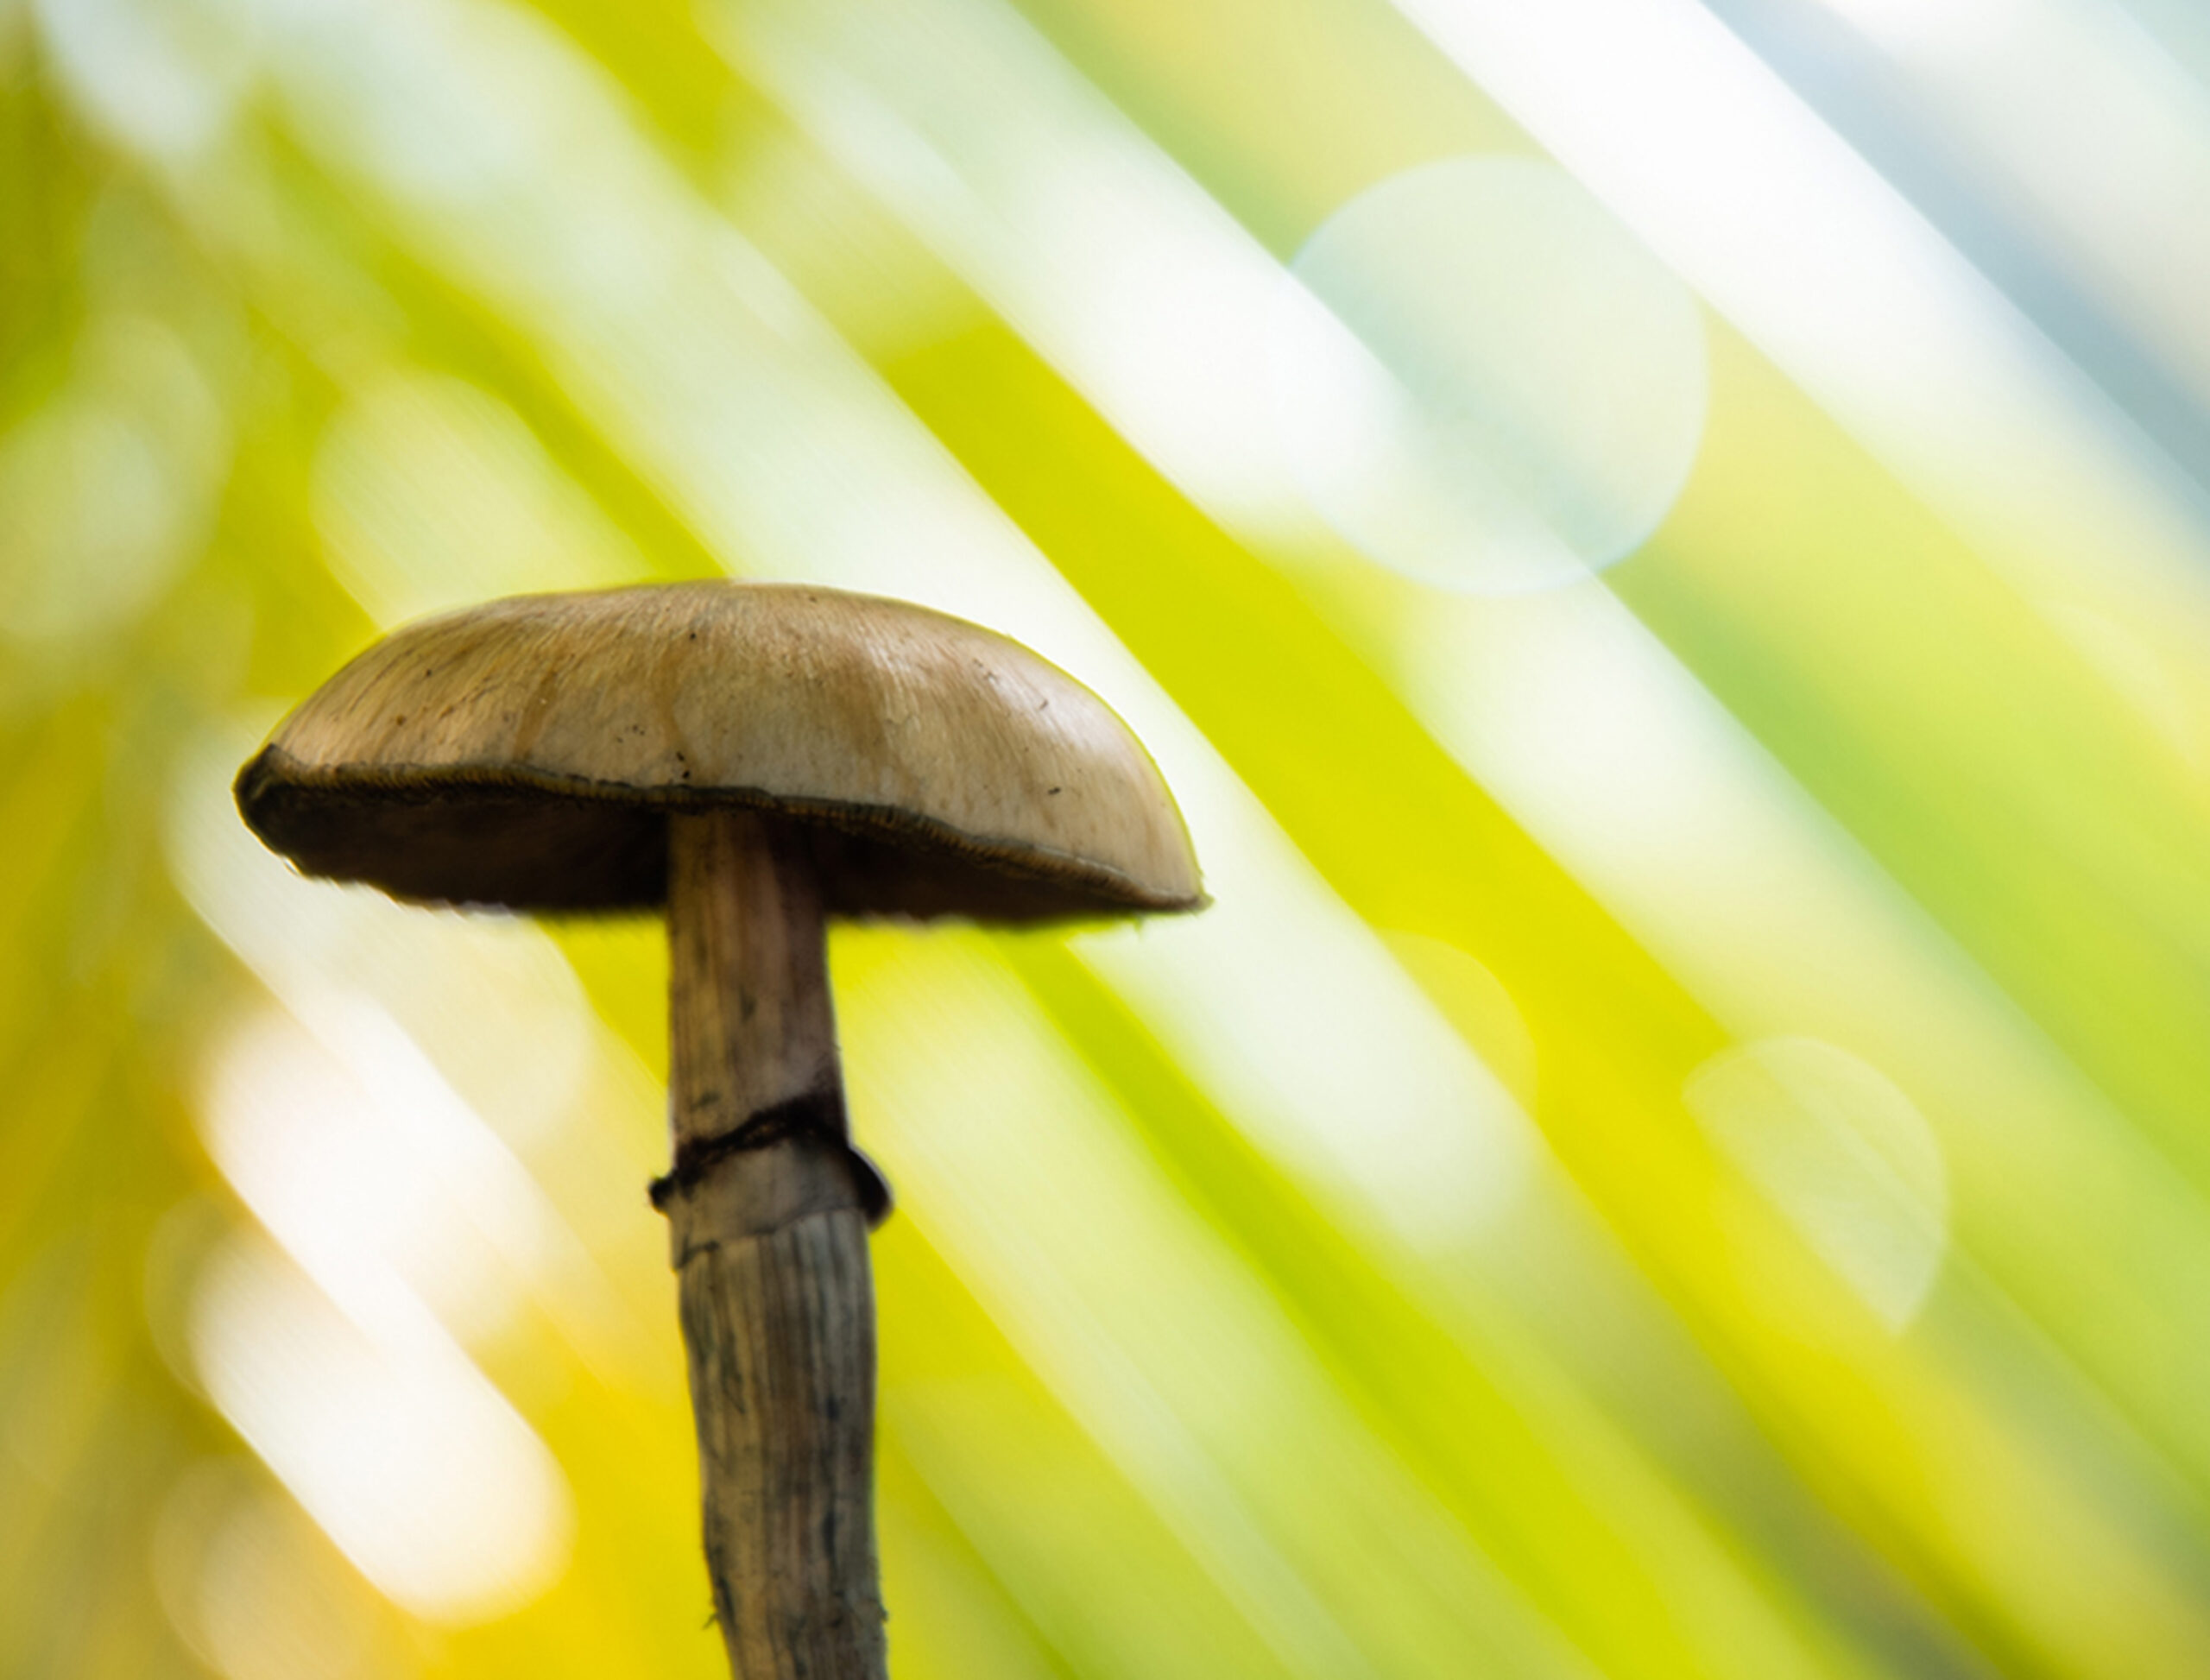 Image shows a psilocybin mushroom